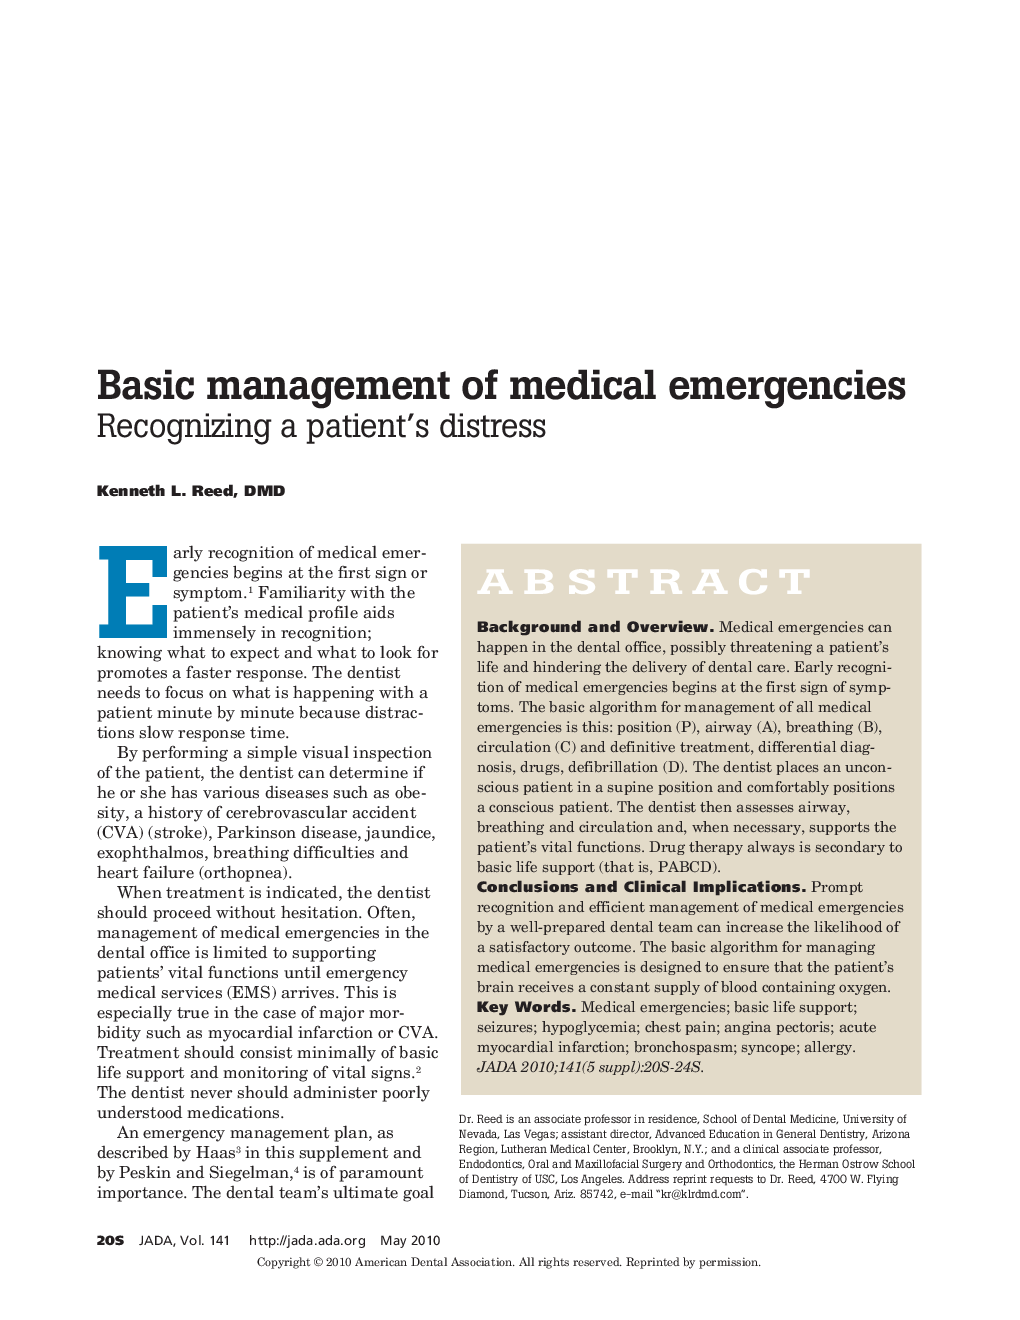 Basic Management of Medical Emergencies : Recognizing a Patient's Distress